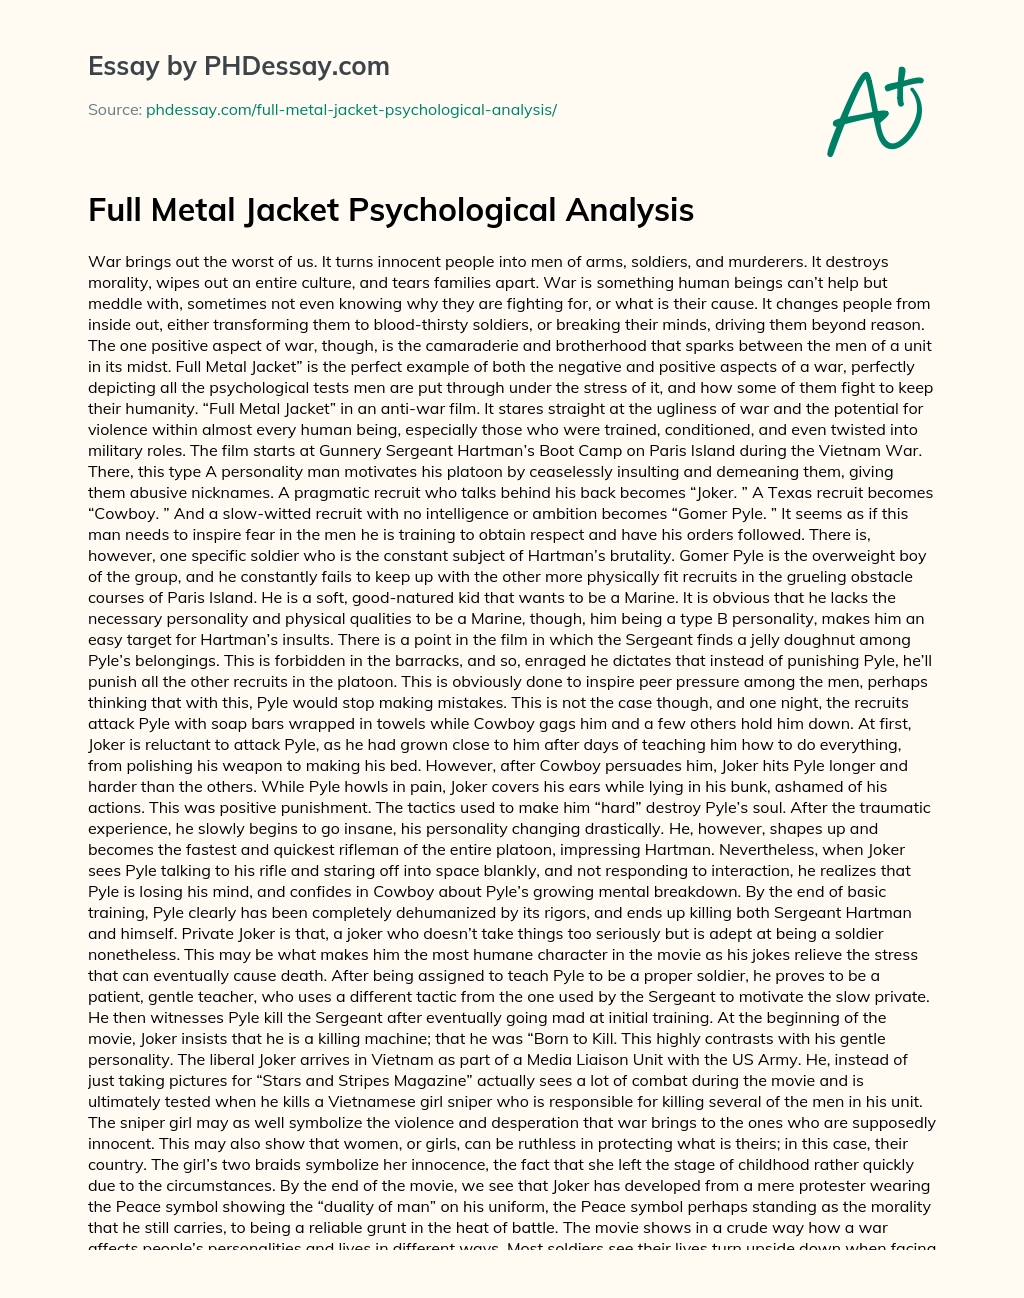 Full Metal Jacket Psychological Analysis essay